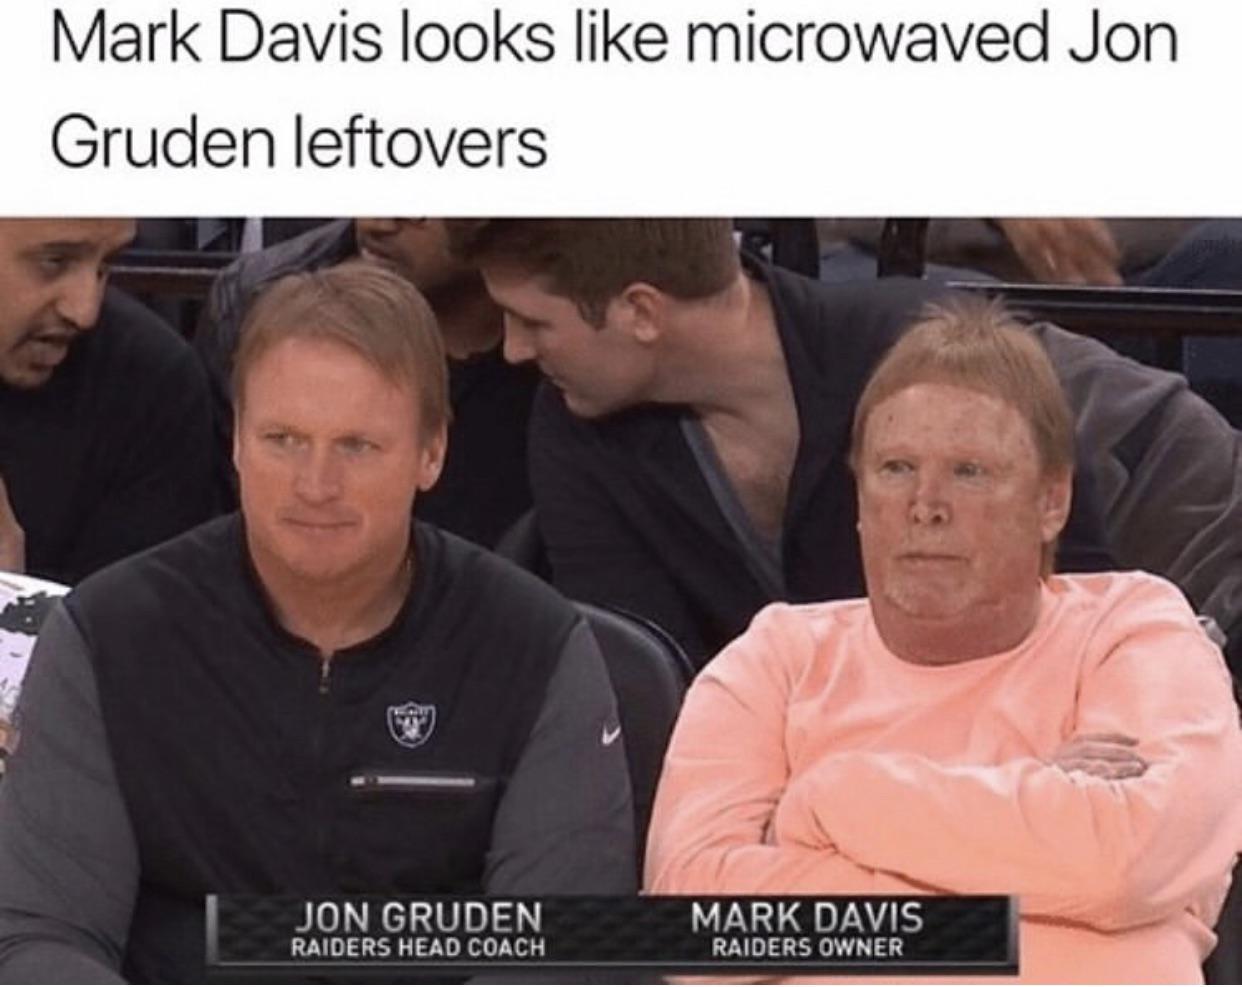 savage insults - mark davis jon gruden microwave - Mark Davis looks microwaved Jon Gruden leftovers Low Jon Gruden Raiders Head Coach Mark Davis Raiders Owner